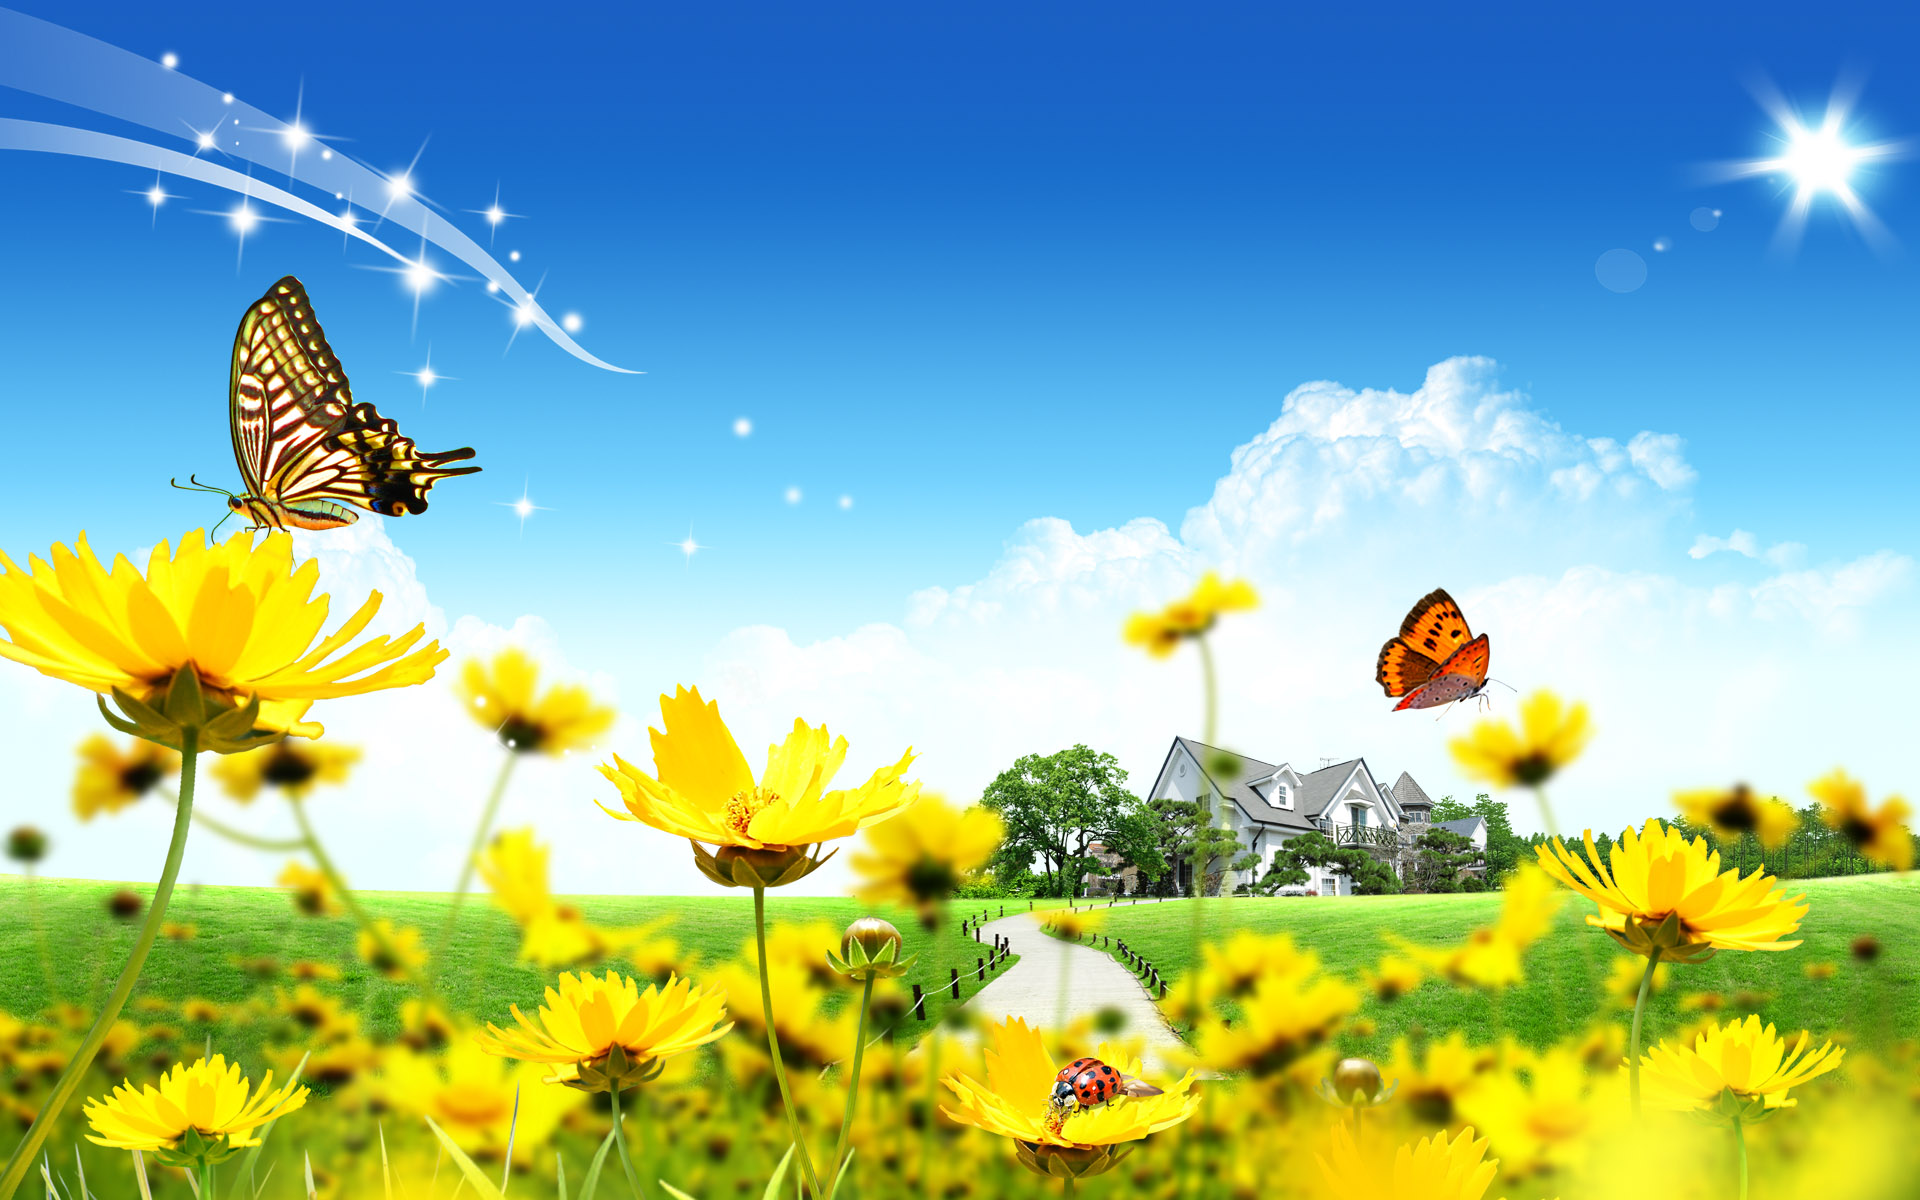 free summer fantasy landscape for desktop wallpaper 1920x1200 80971 1920x1200